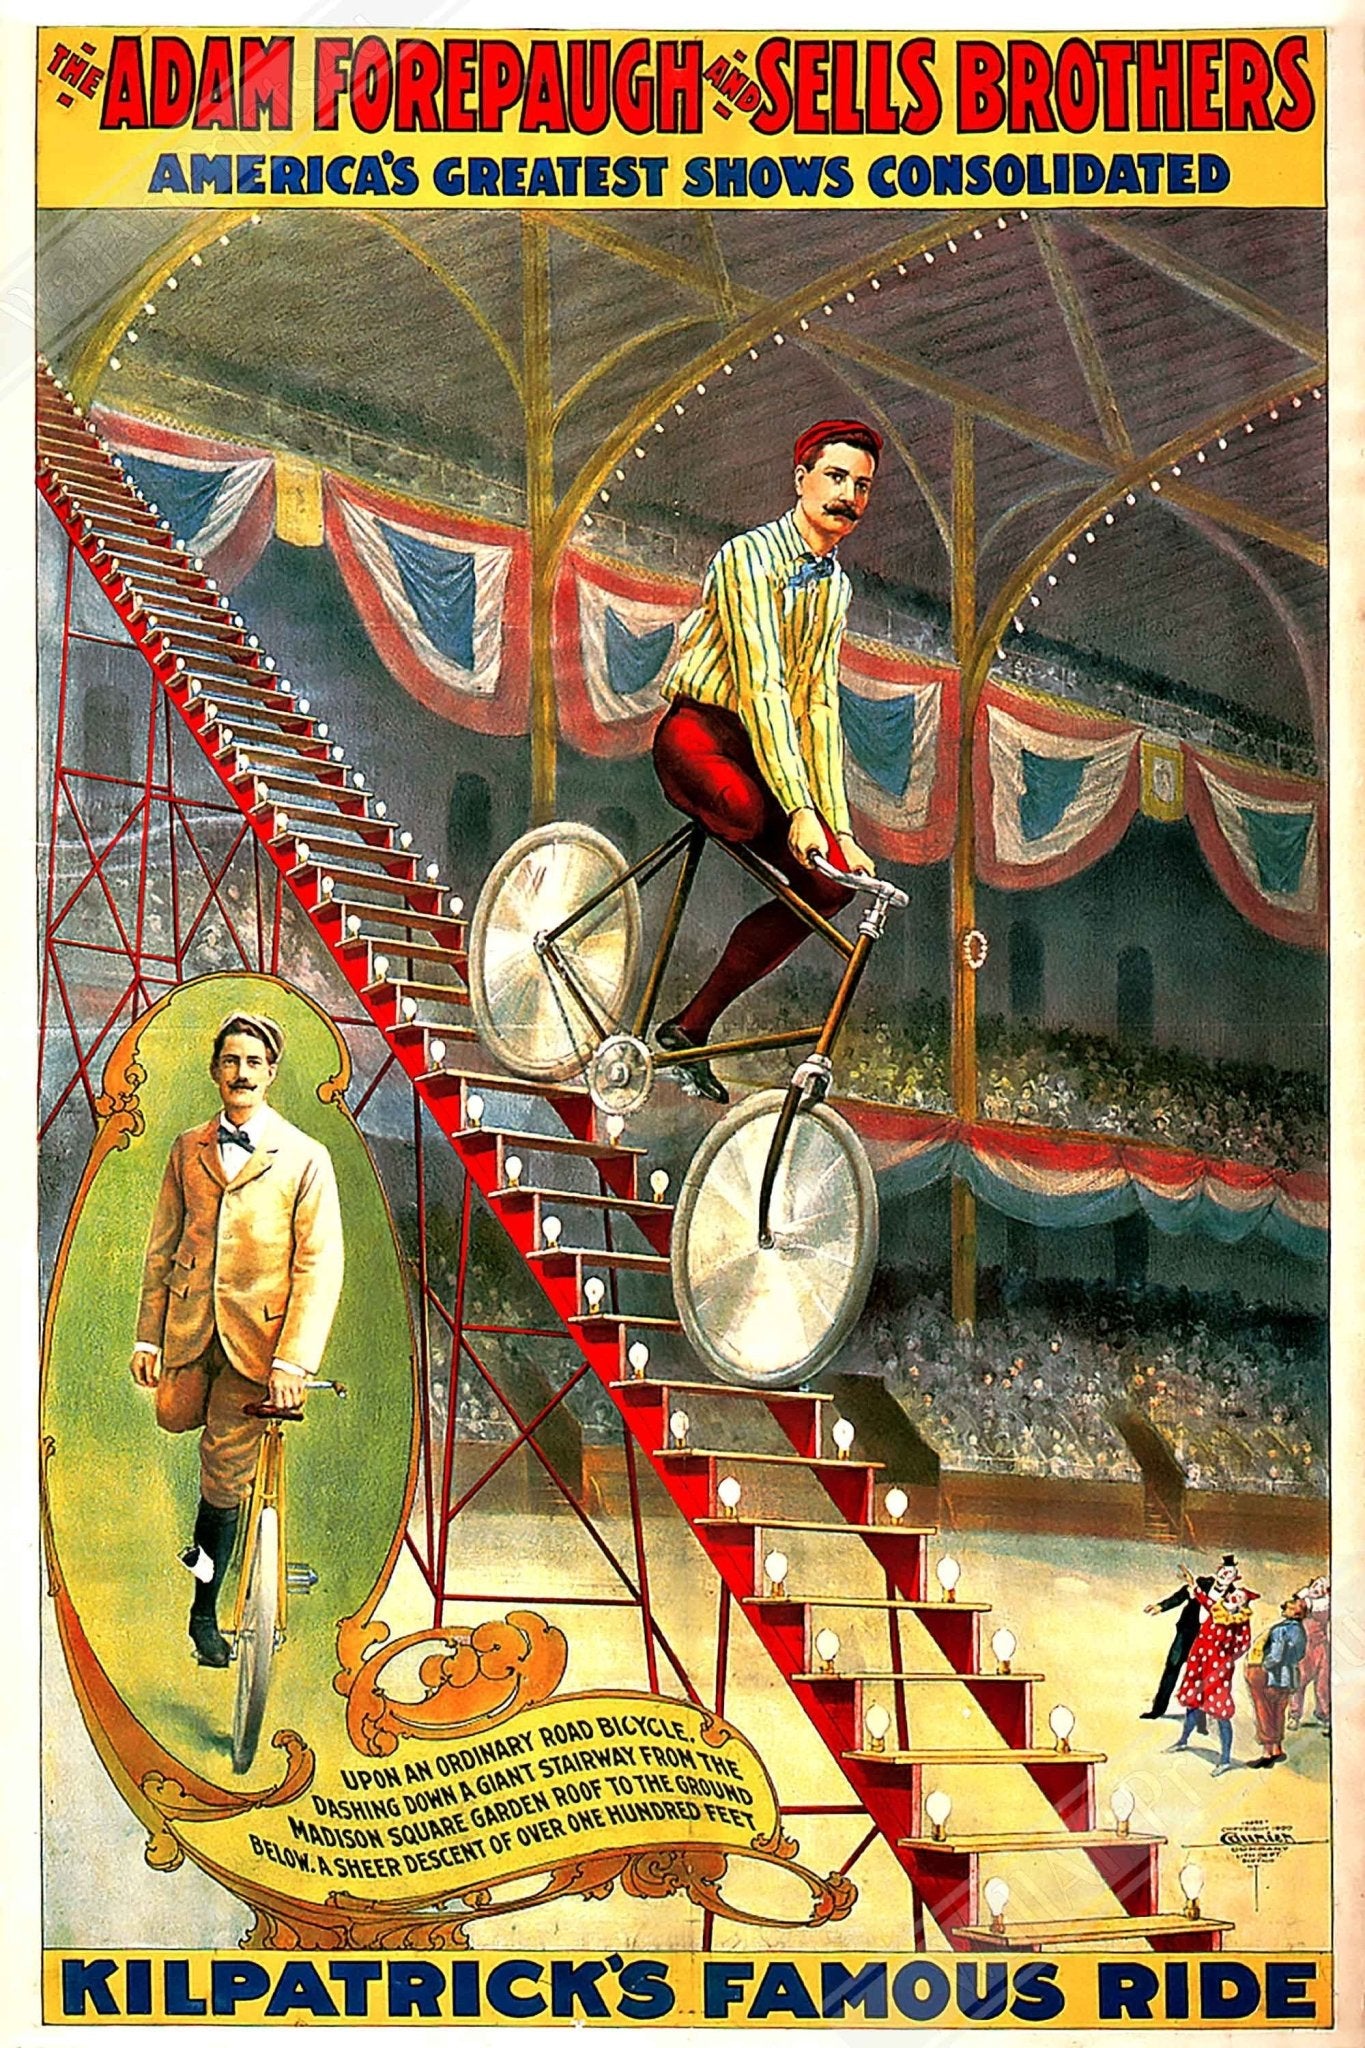 Vintage Circus Poster, Kilpatricks Cycle Ride, Sells Brothers, Americas Greatest Shows Circa 1900. - WallArtPrints4U